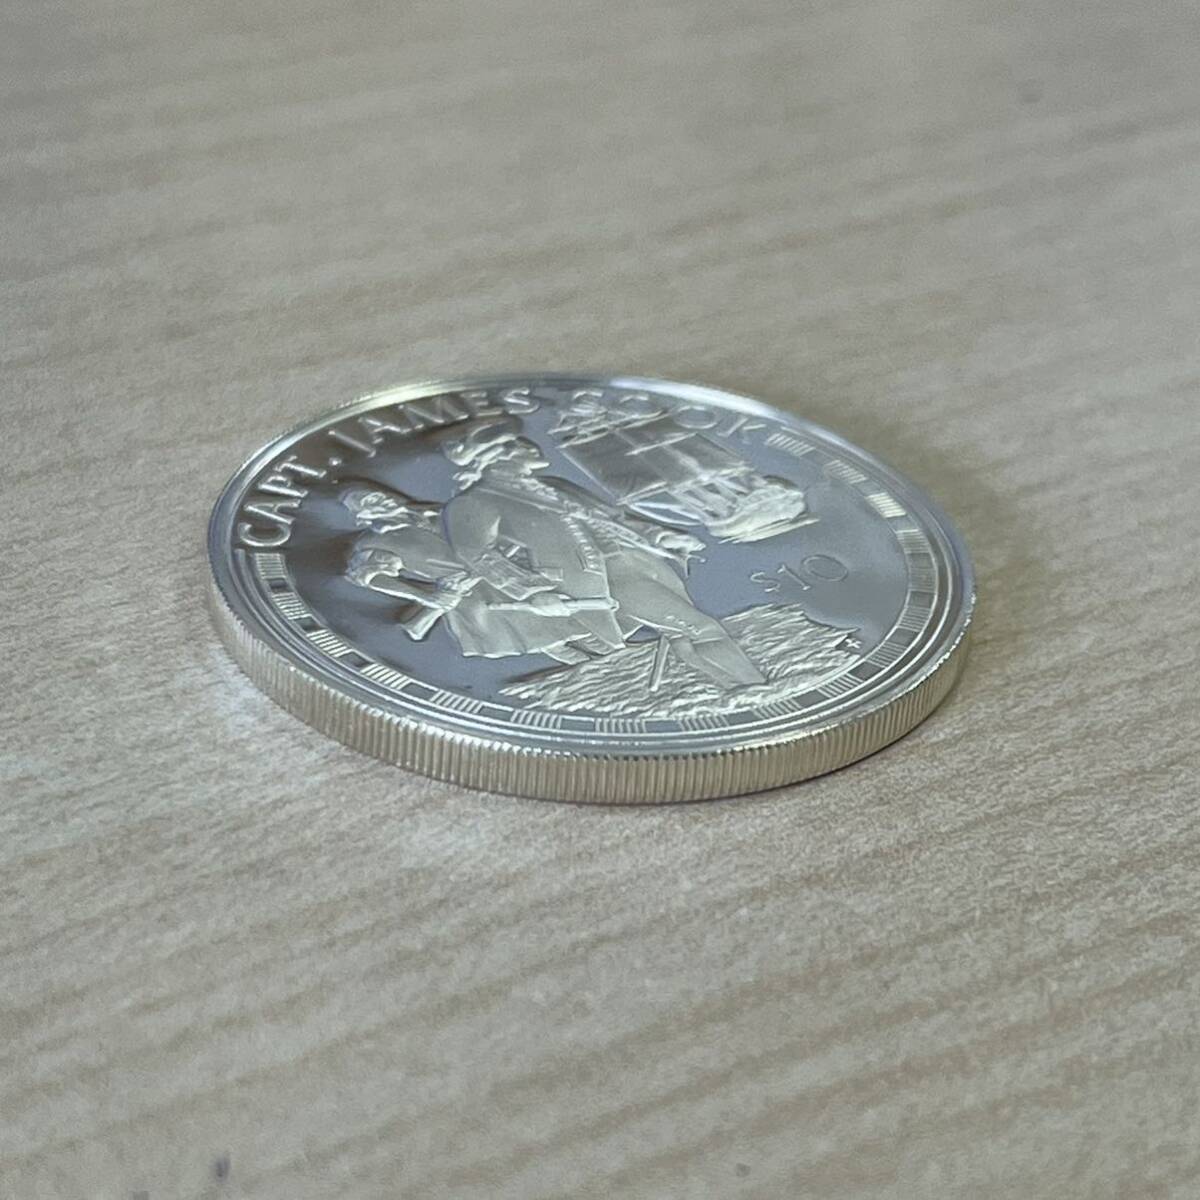 【TS0421】クック諸島 キャプテンジェームスクック 10ドル 銀貨 貨幣 通貨 硬貨 コイン コレクションの画像4